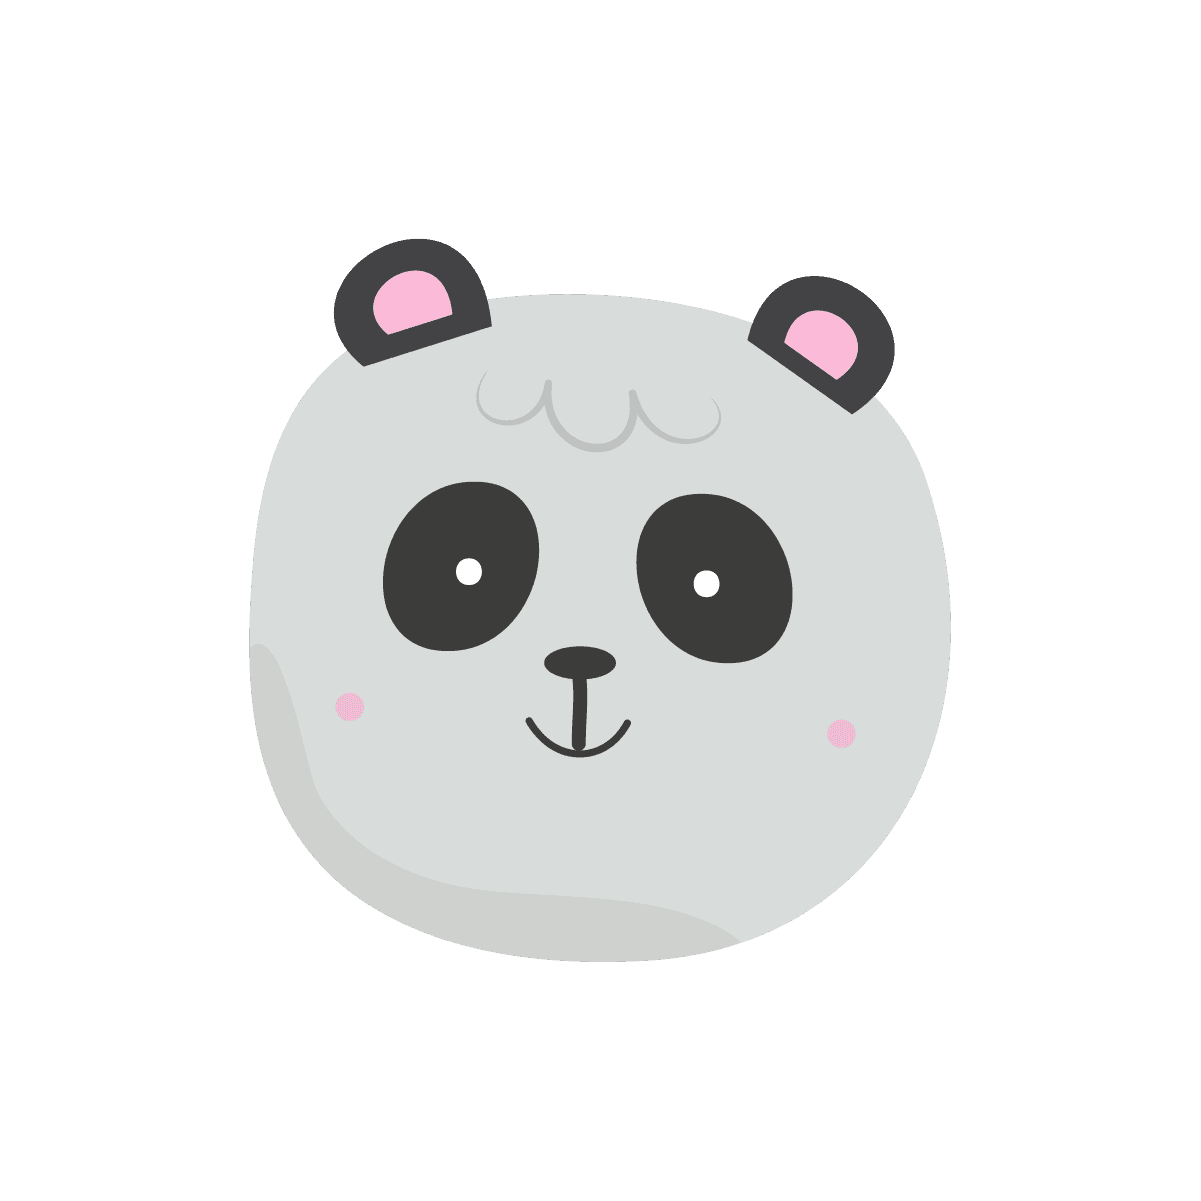 flat adorable smiling panda head illustration